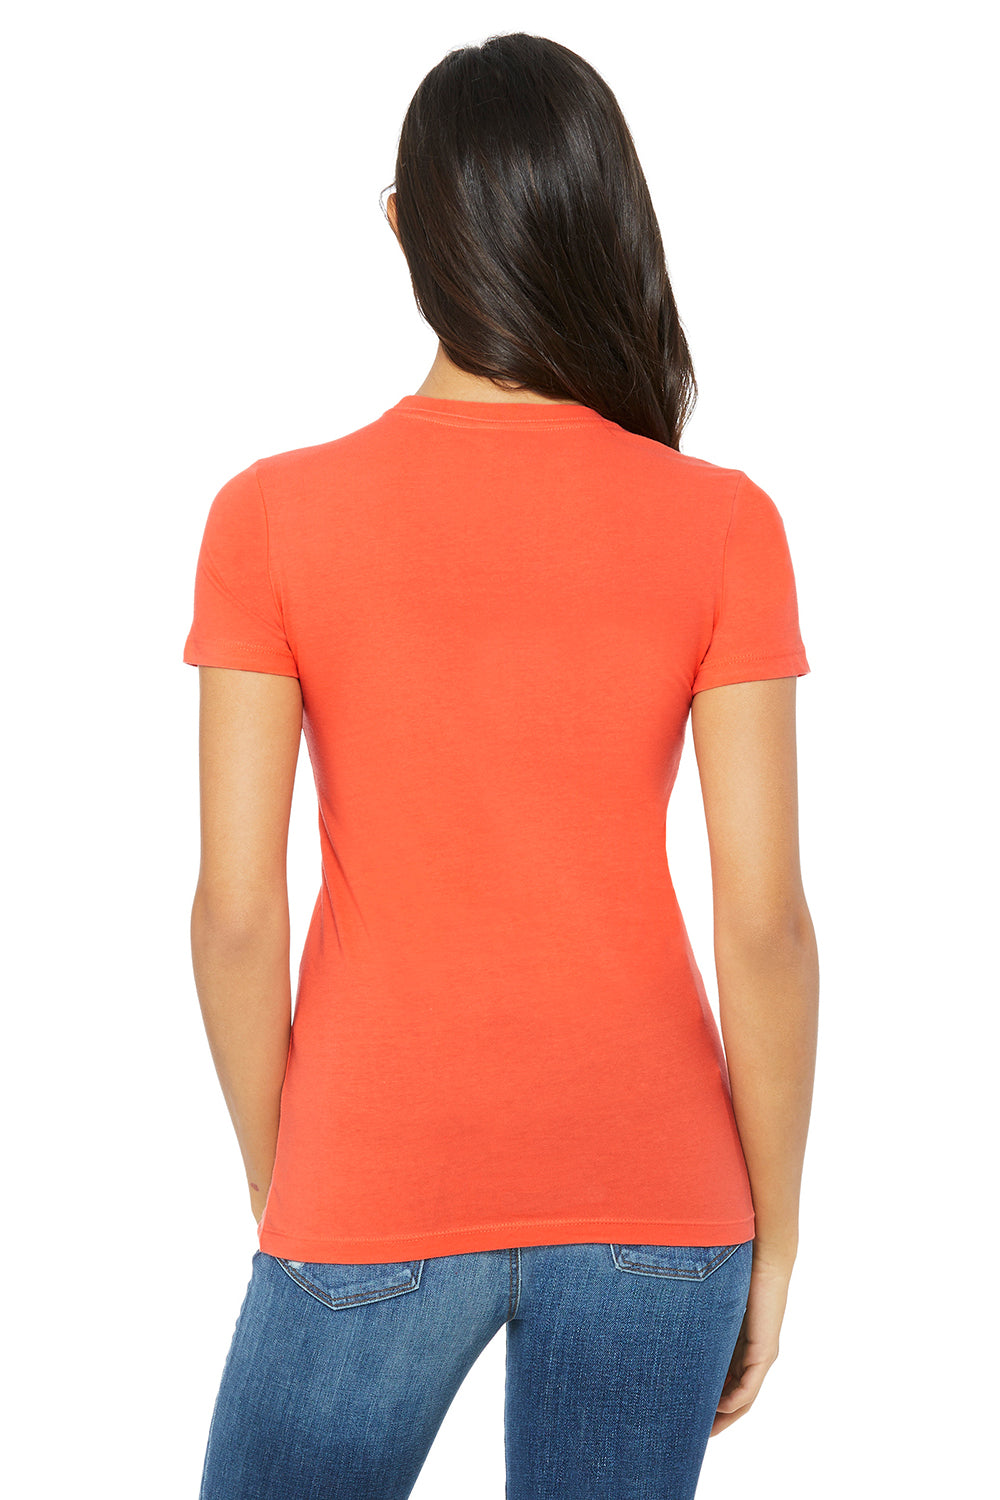 Bella + Canvas 6004 Womens The Favorite Short Sleeve Crewneck T-Shirt Coral Orange Back